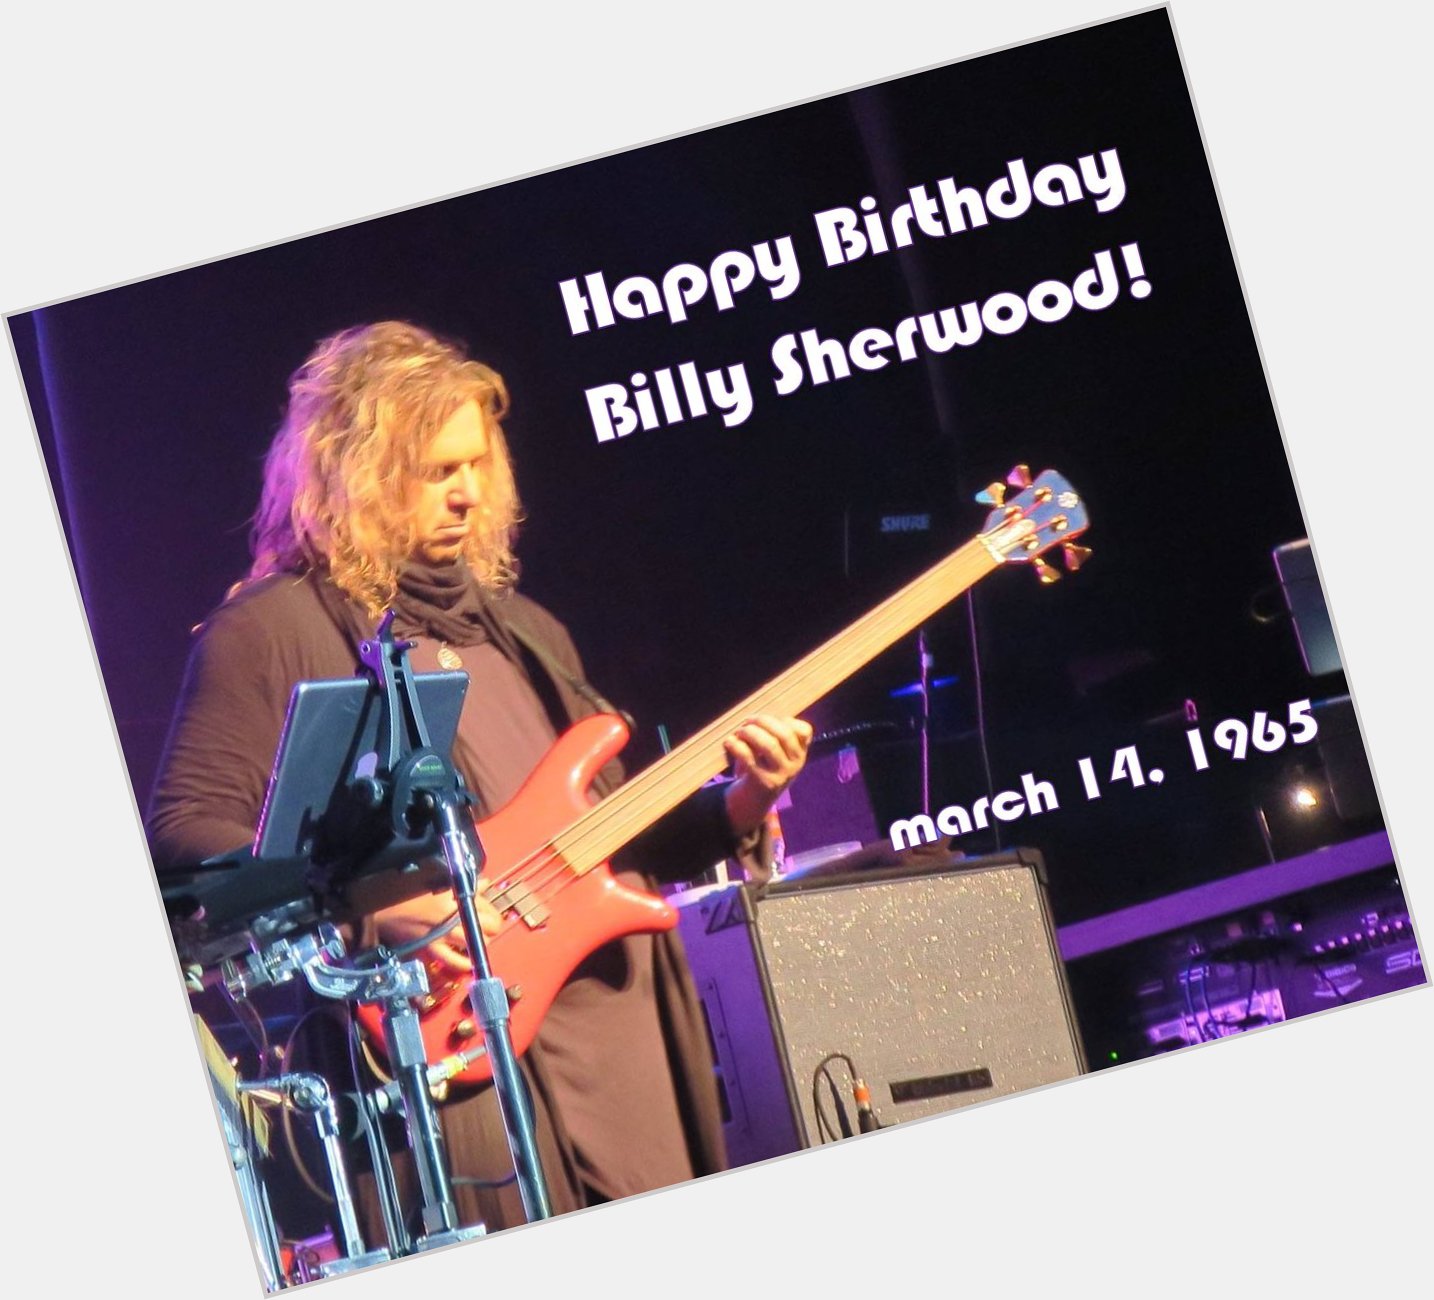 Happy Birthday Billy Sherwood!!

[Born March 14, 1965] 